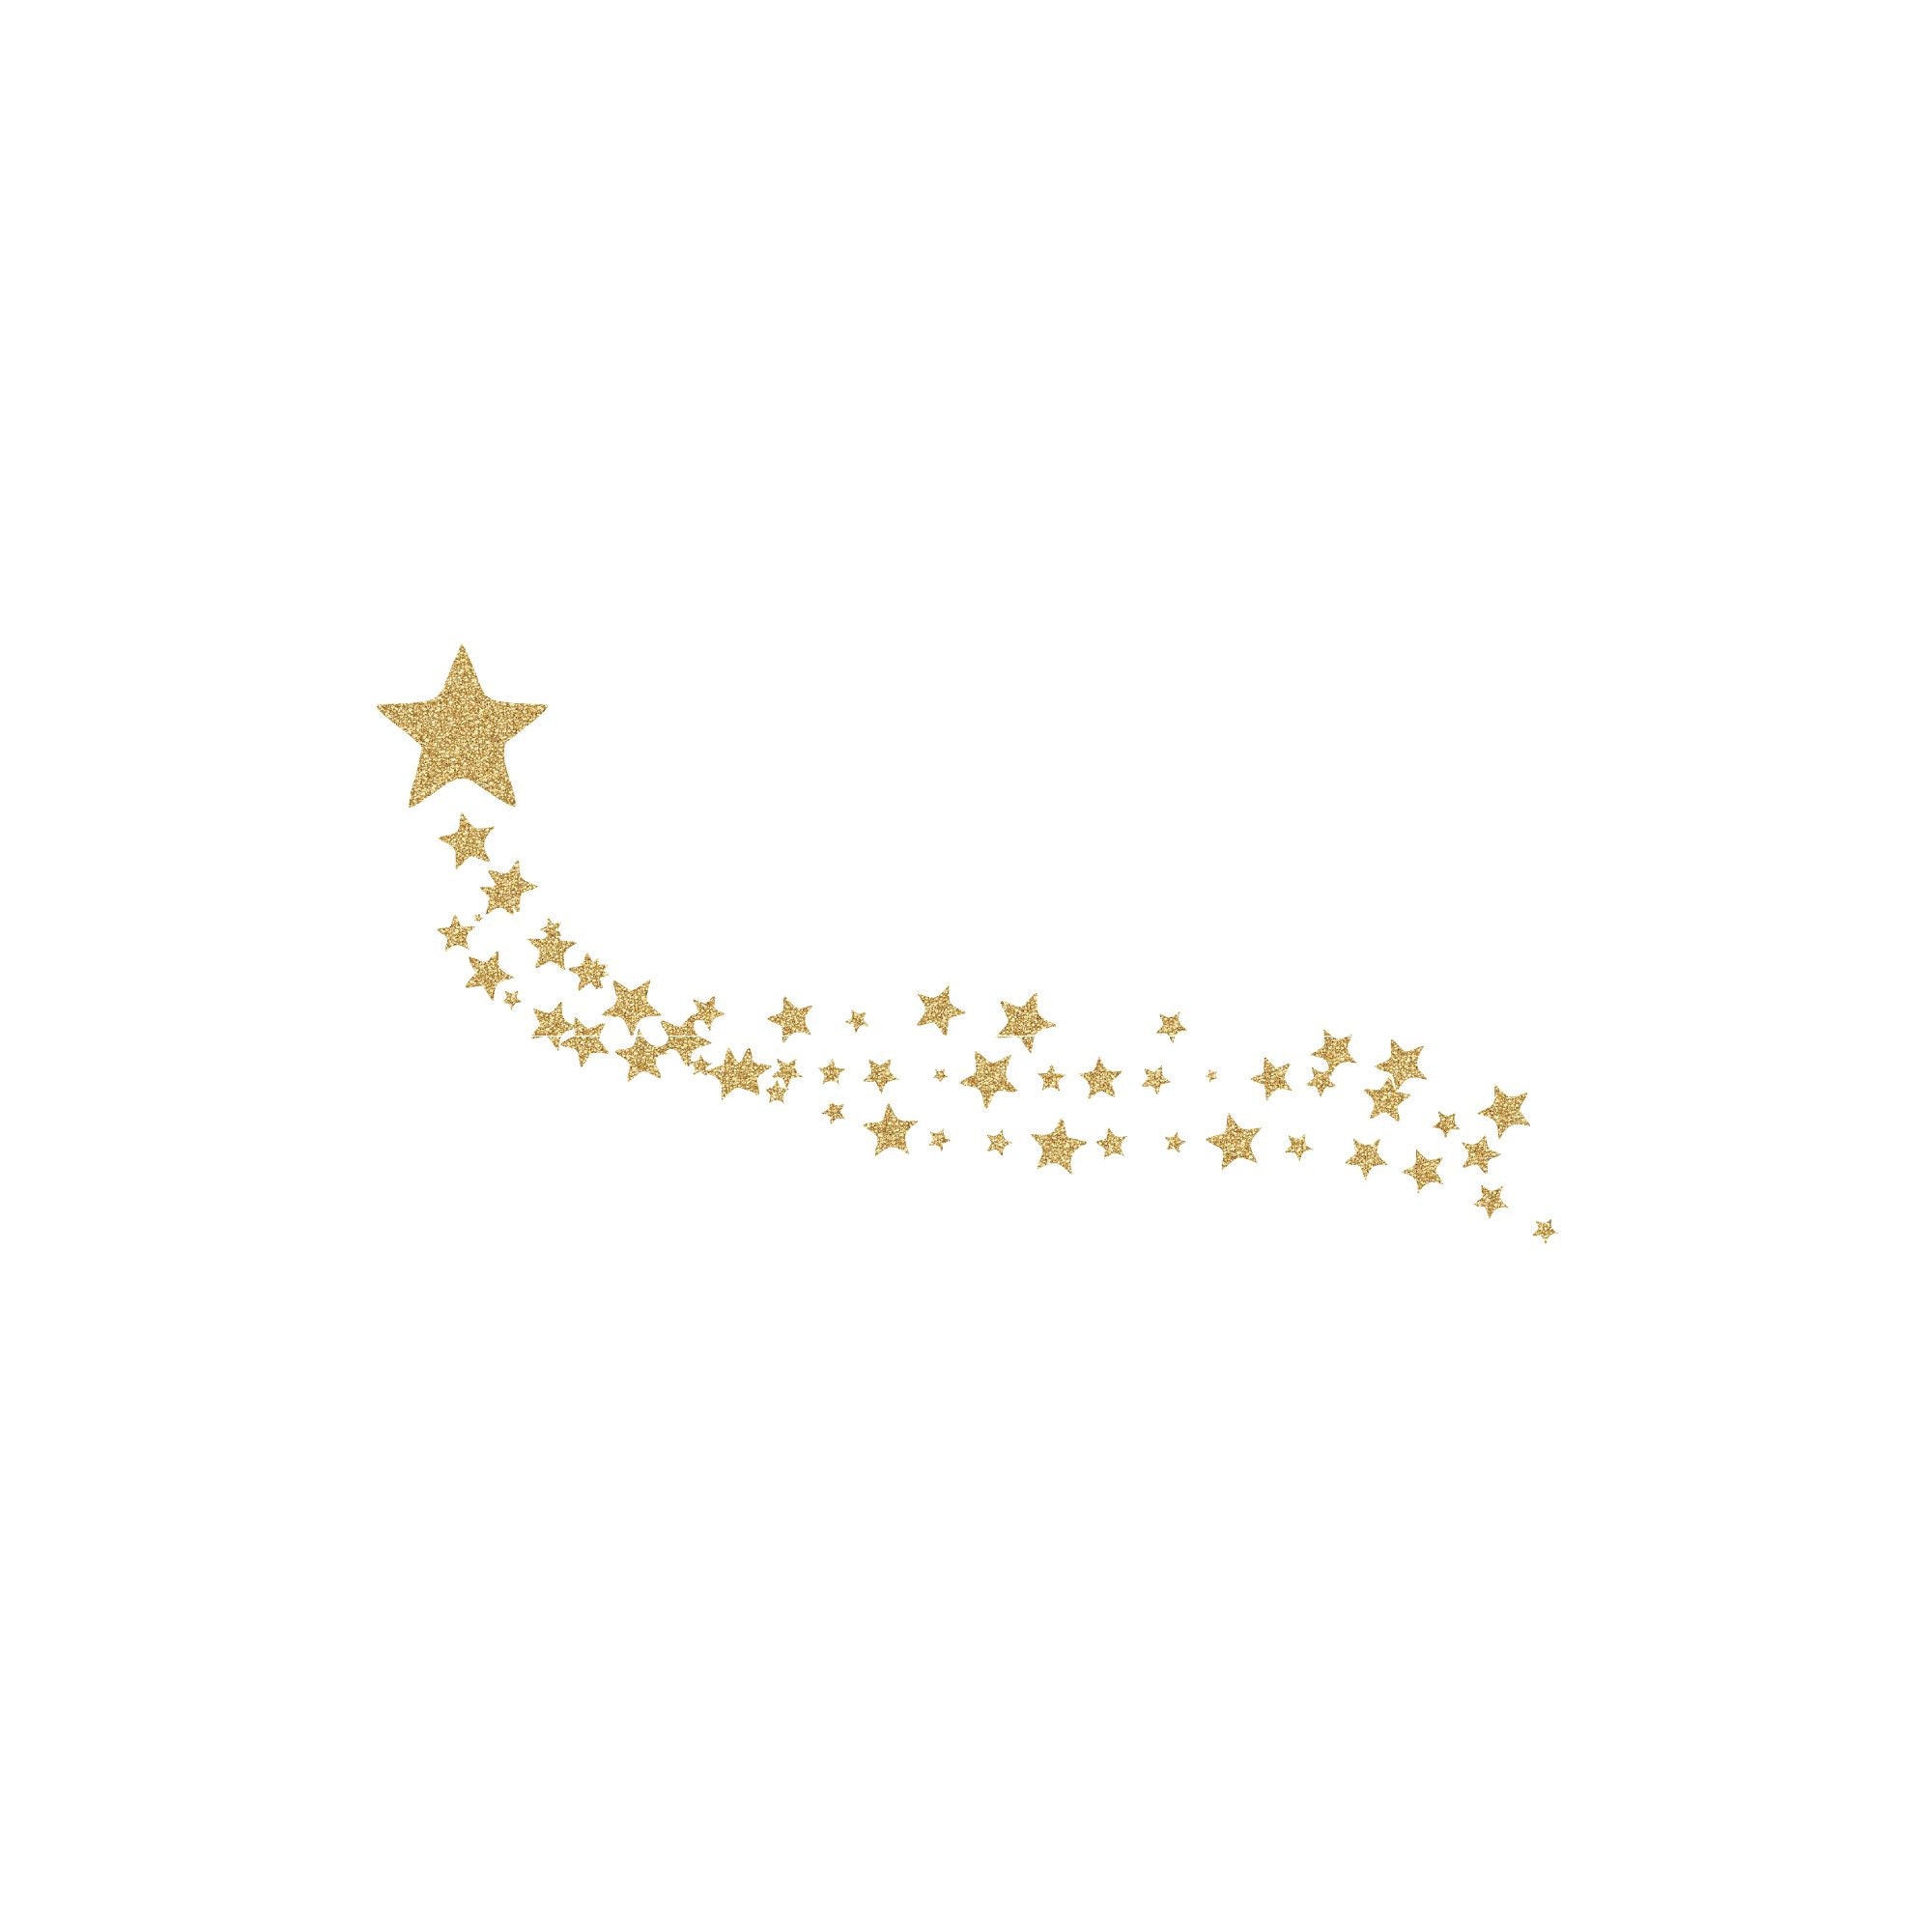 Gold Stars, Gold Glitter, Star Digital, Stars Clip Art Instant